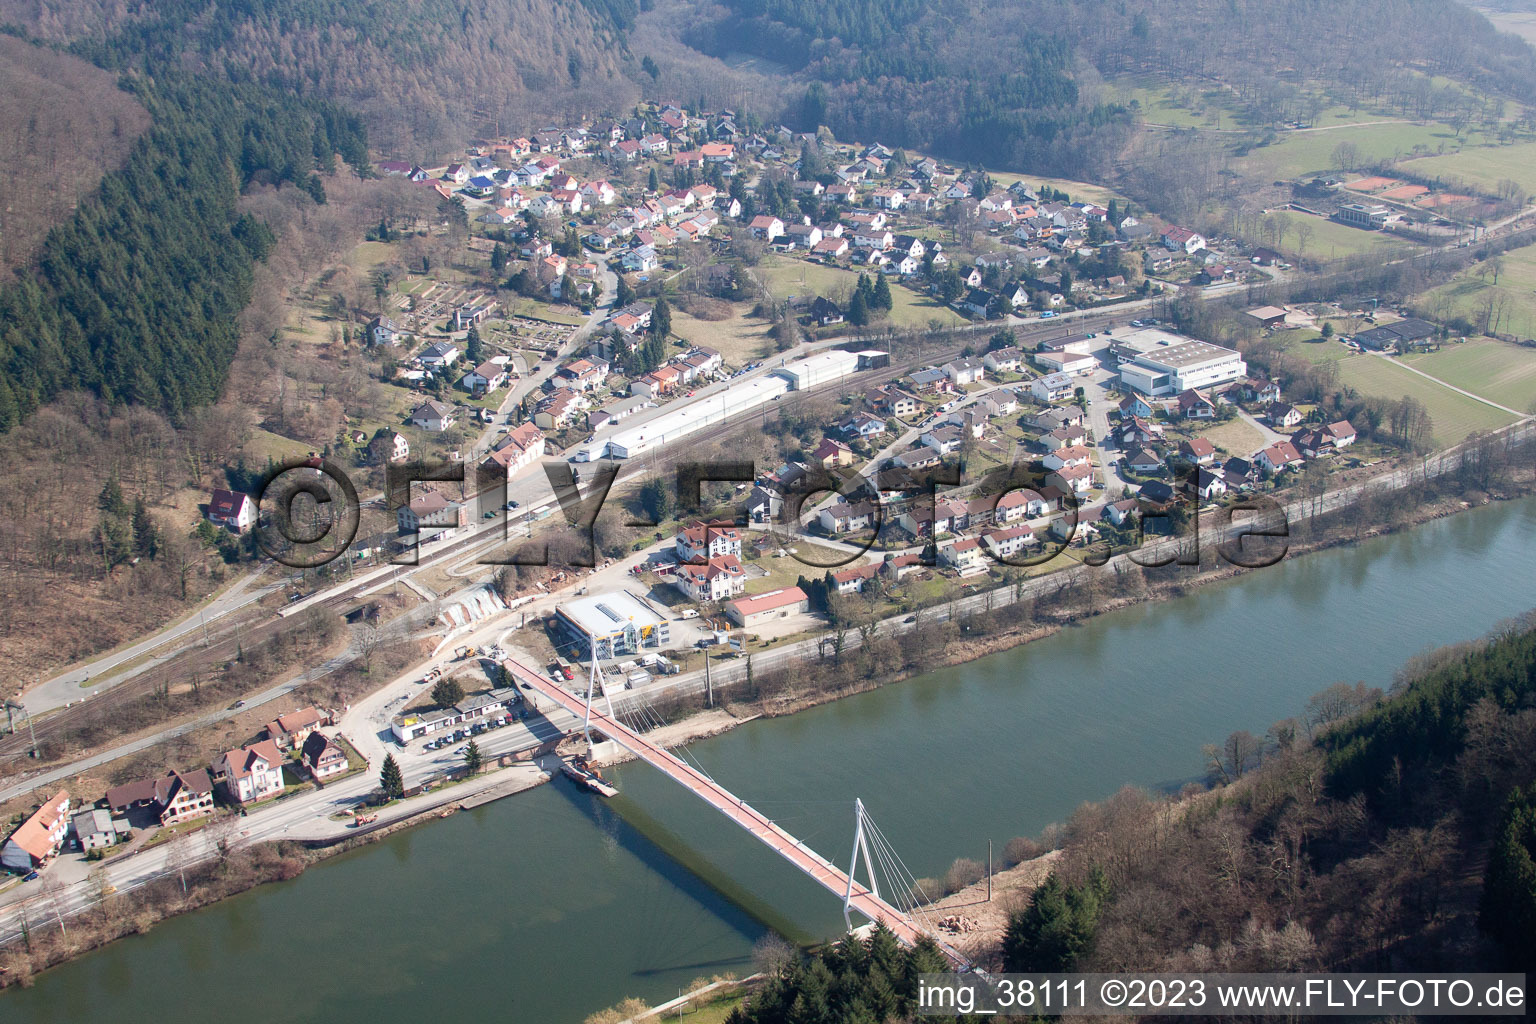 Zwingenberg dans le département Bade-Wurtemberg, Allemagne hors des airs